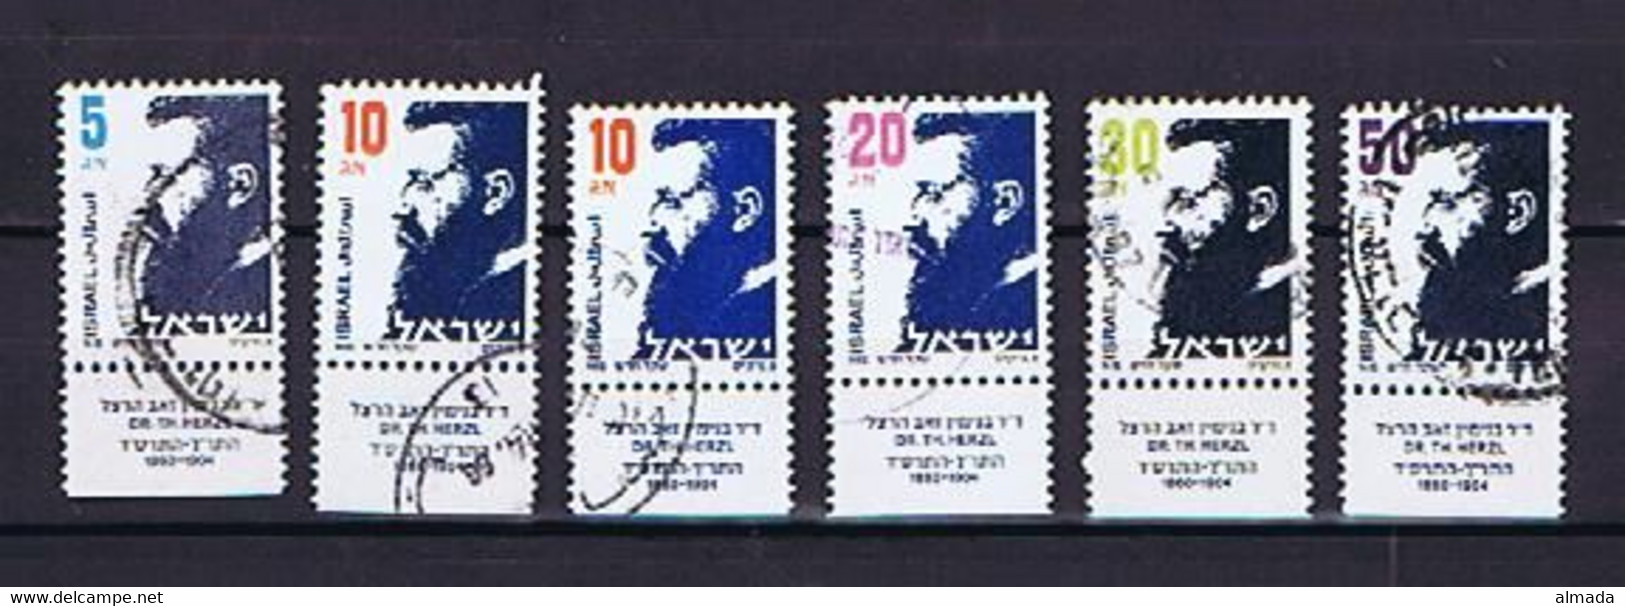 Israel 1986: Mi.-Nr. 1019-1023 Used / Gestempelt With TABs (see Description) - Gebraucht (mit Tabs)